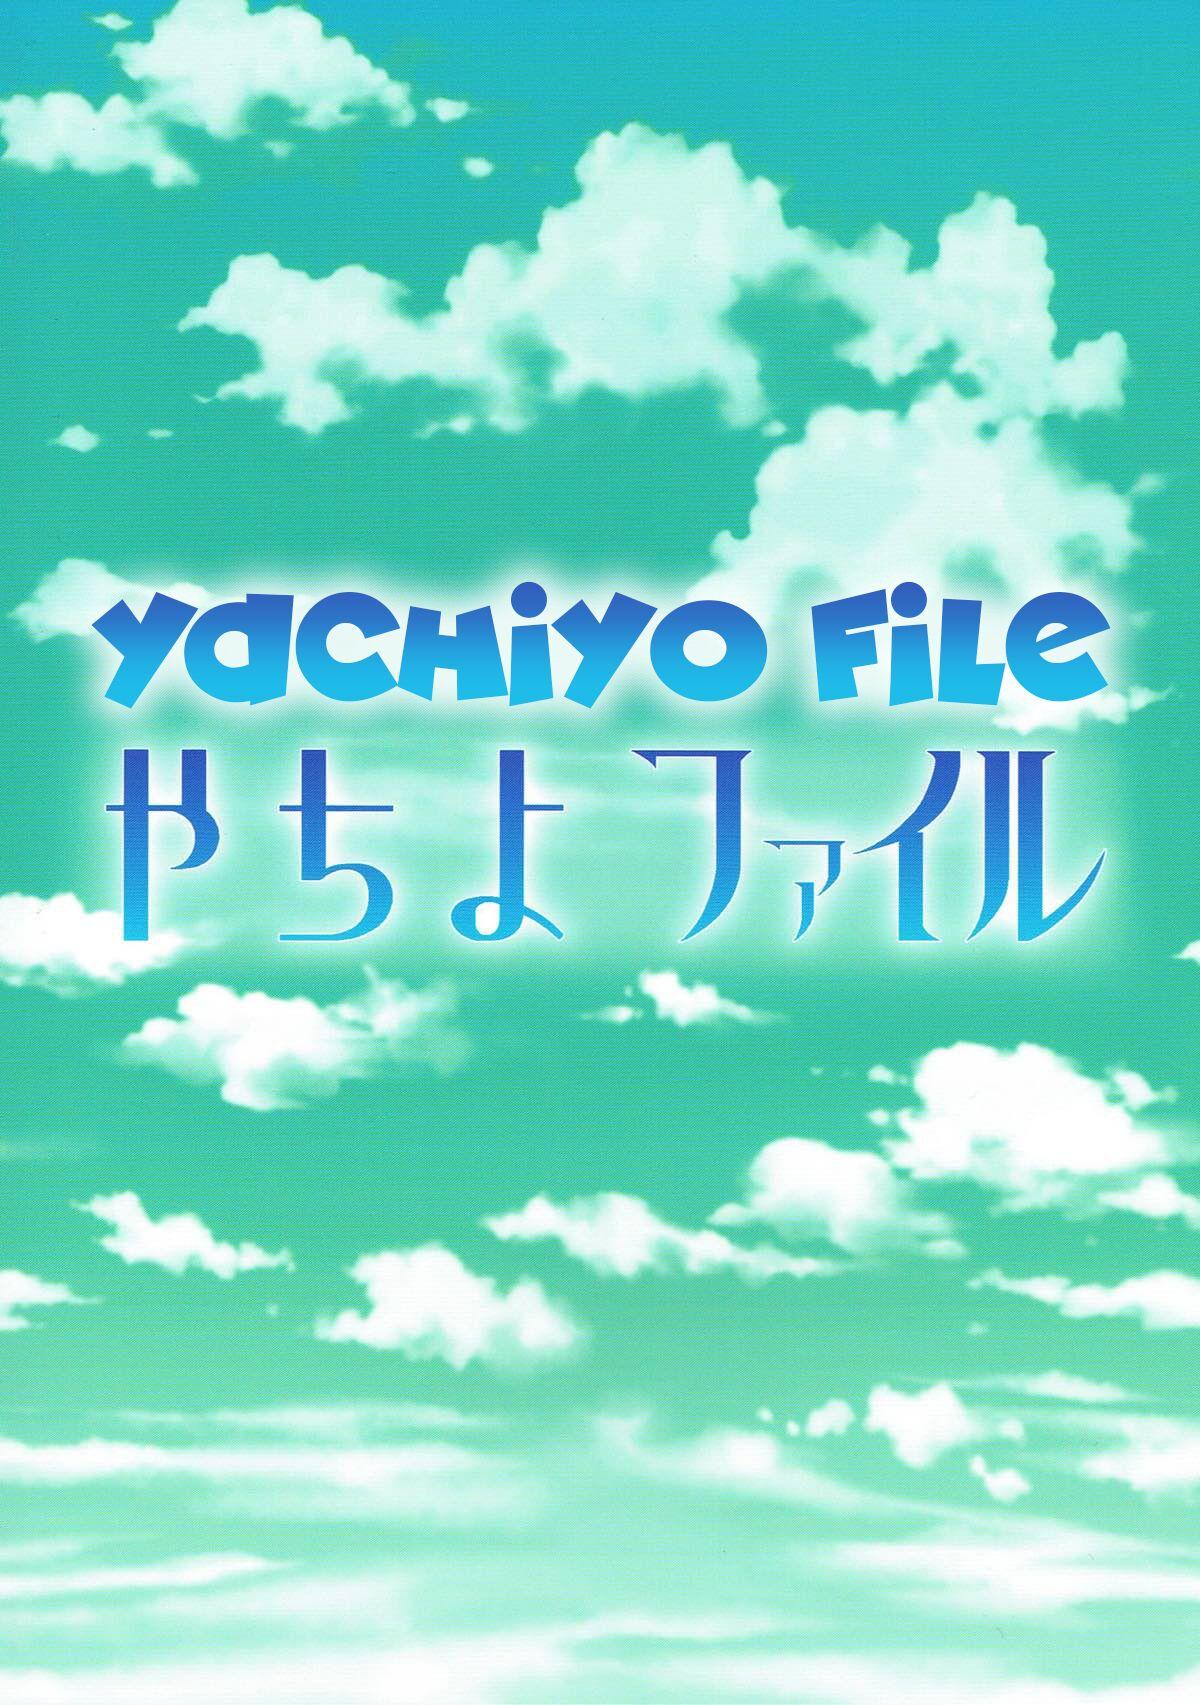 Yachiyo File 17